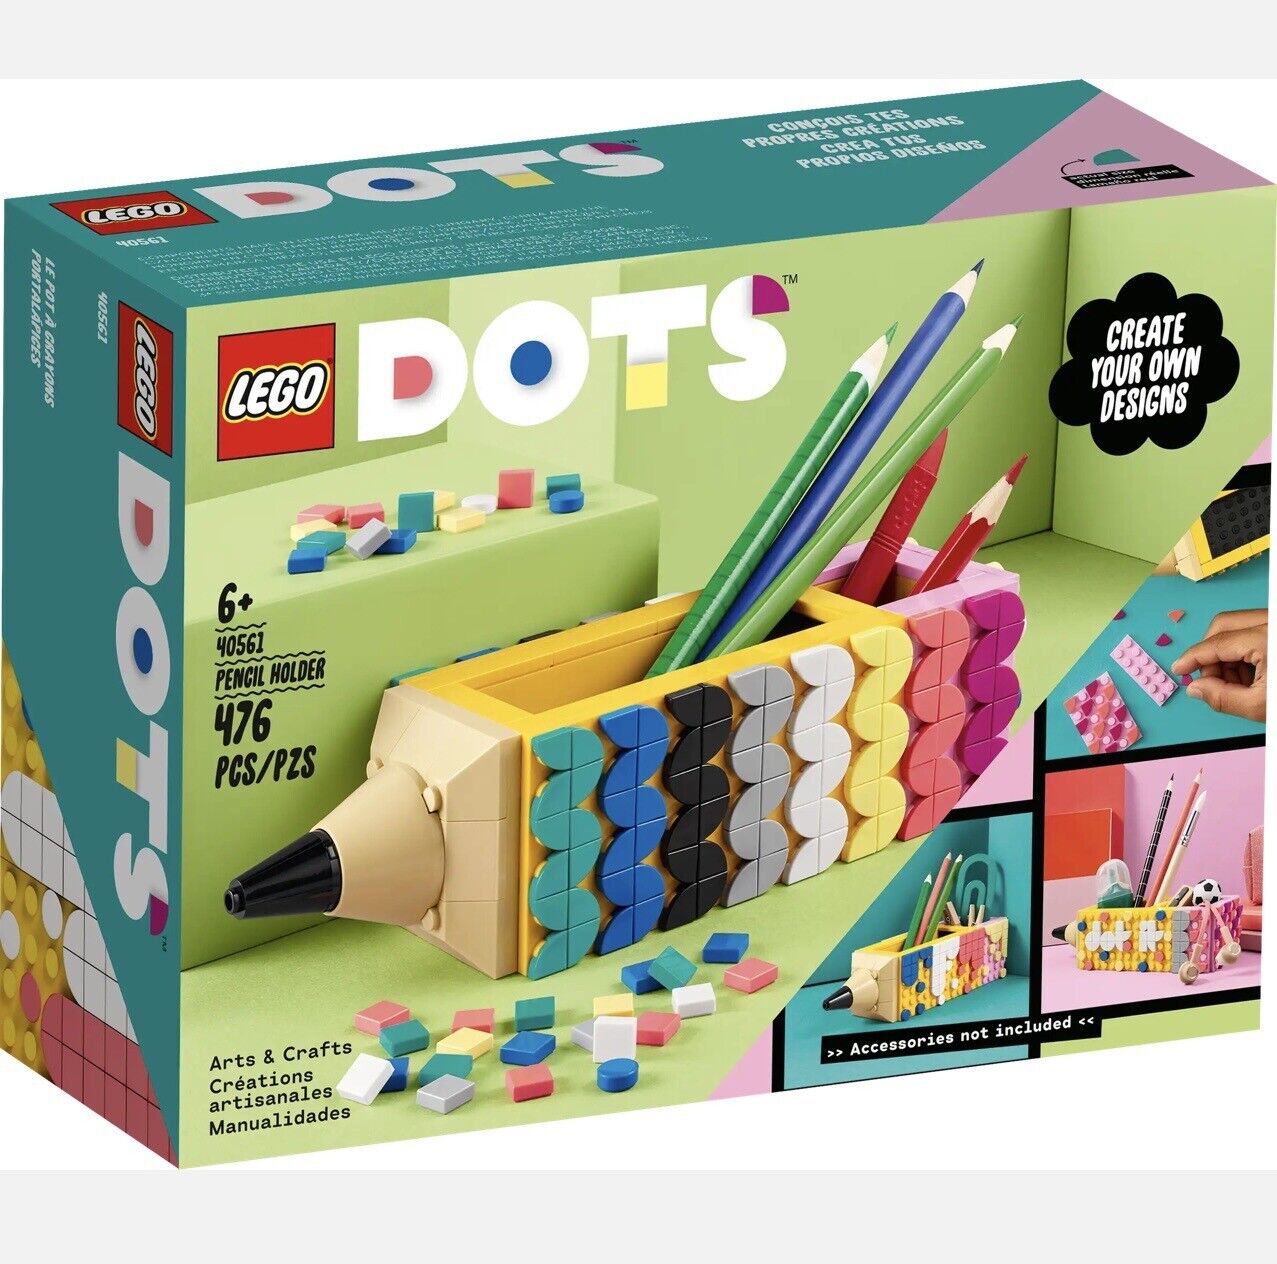 Lego New DOTS Promotional Pencil Holder Set 40561